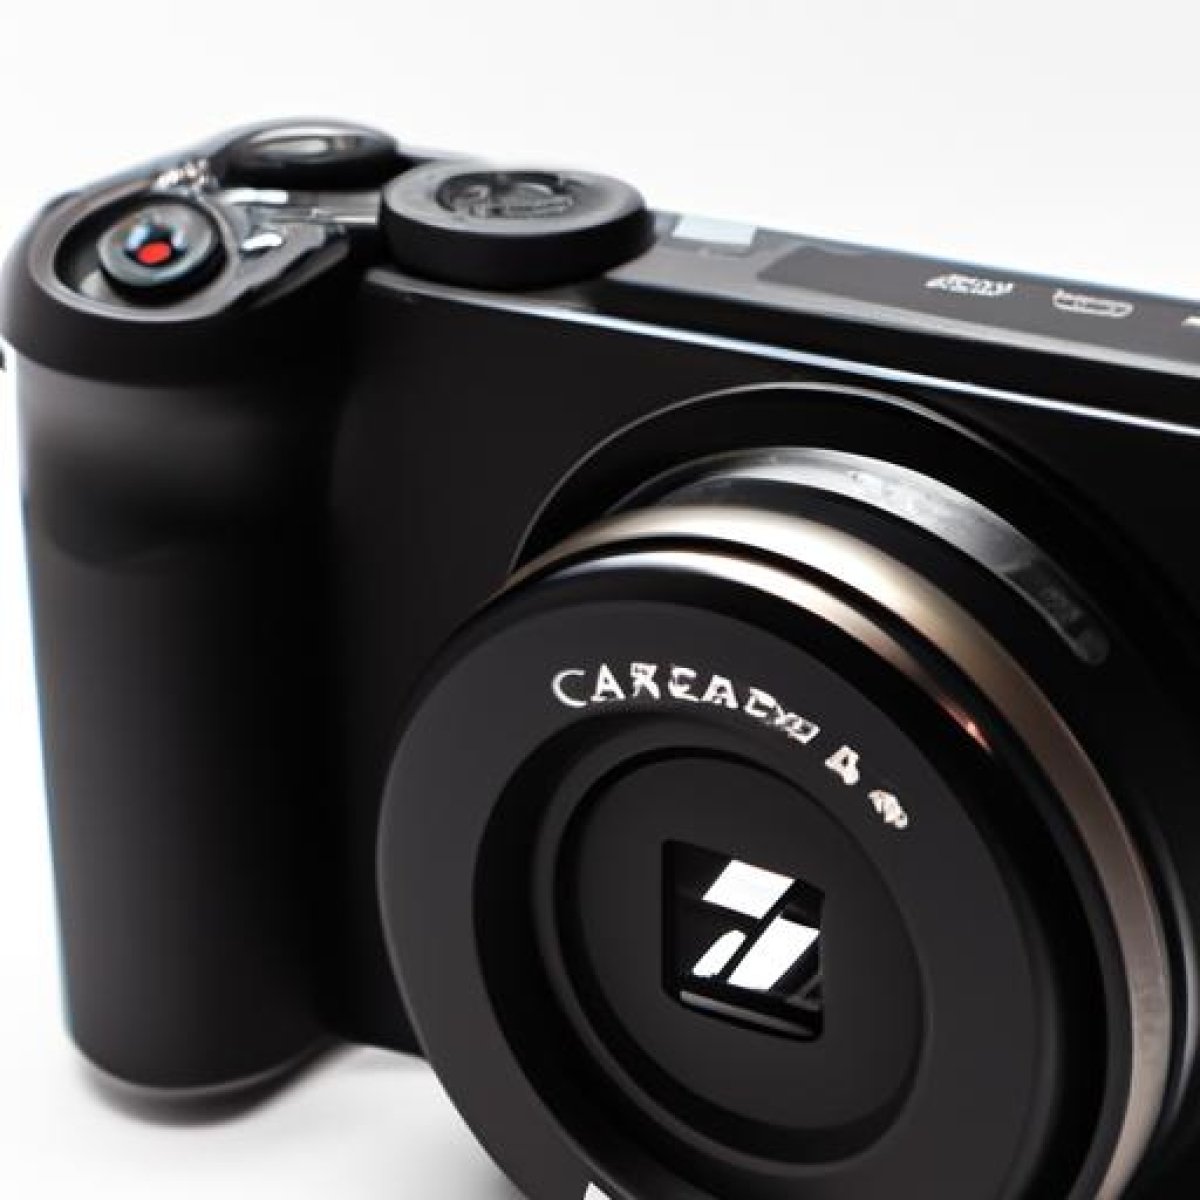 Canon powershot g7 x mark ii camera